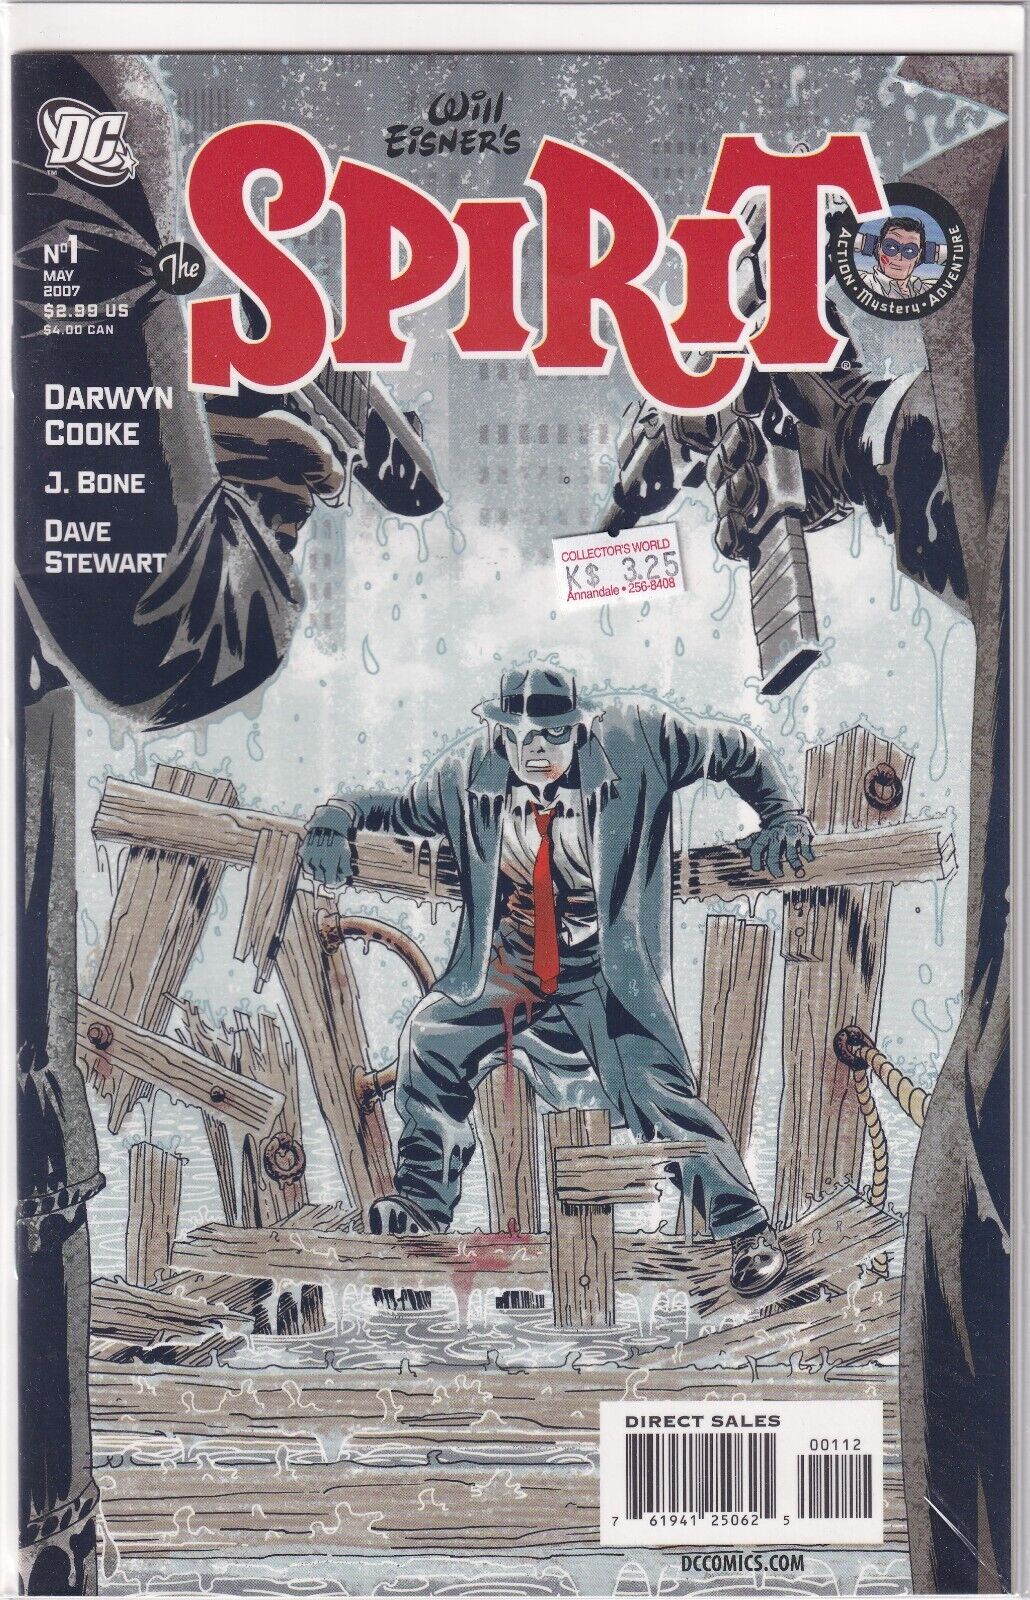 Will Esiner's The Spirit #1 2nd Printing Variant DC Comics (2007) Cooke Bone